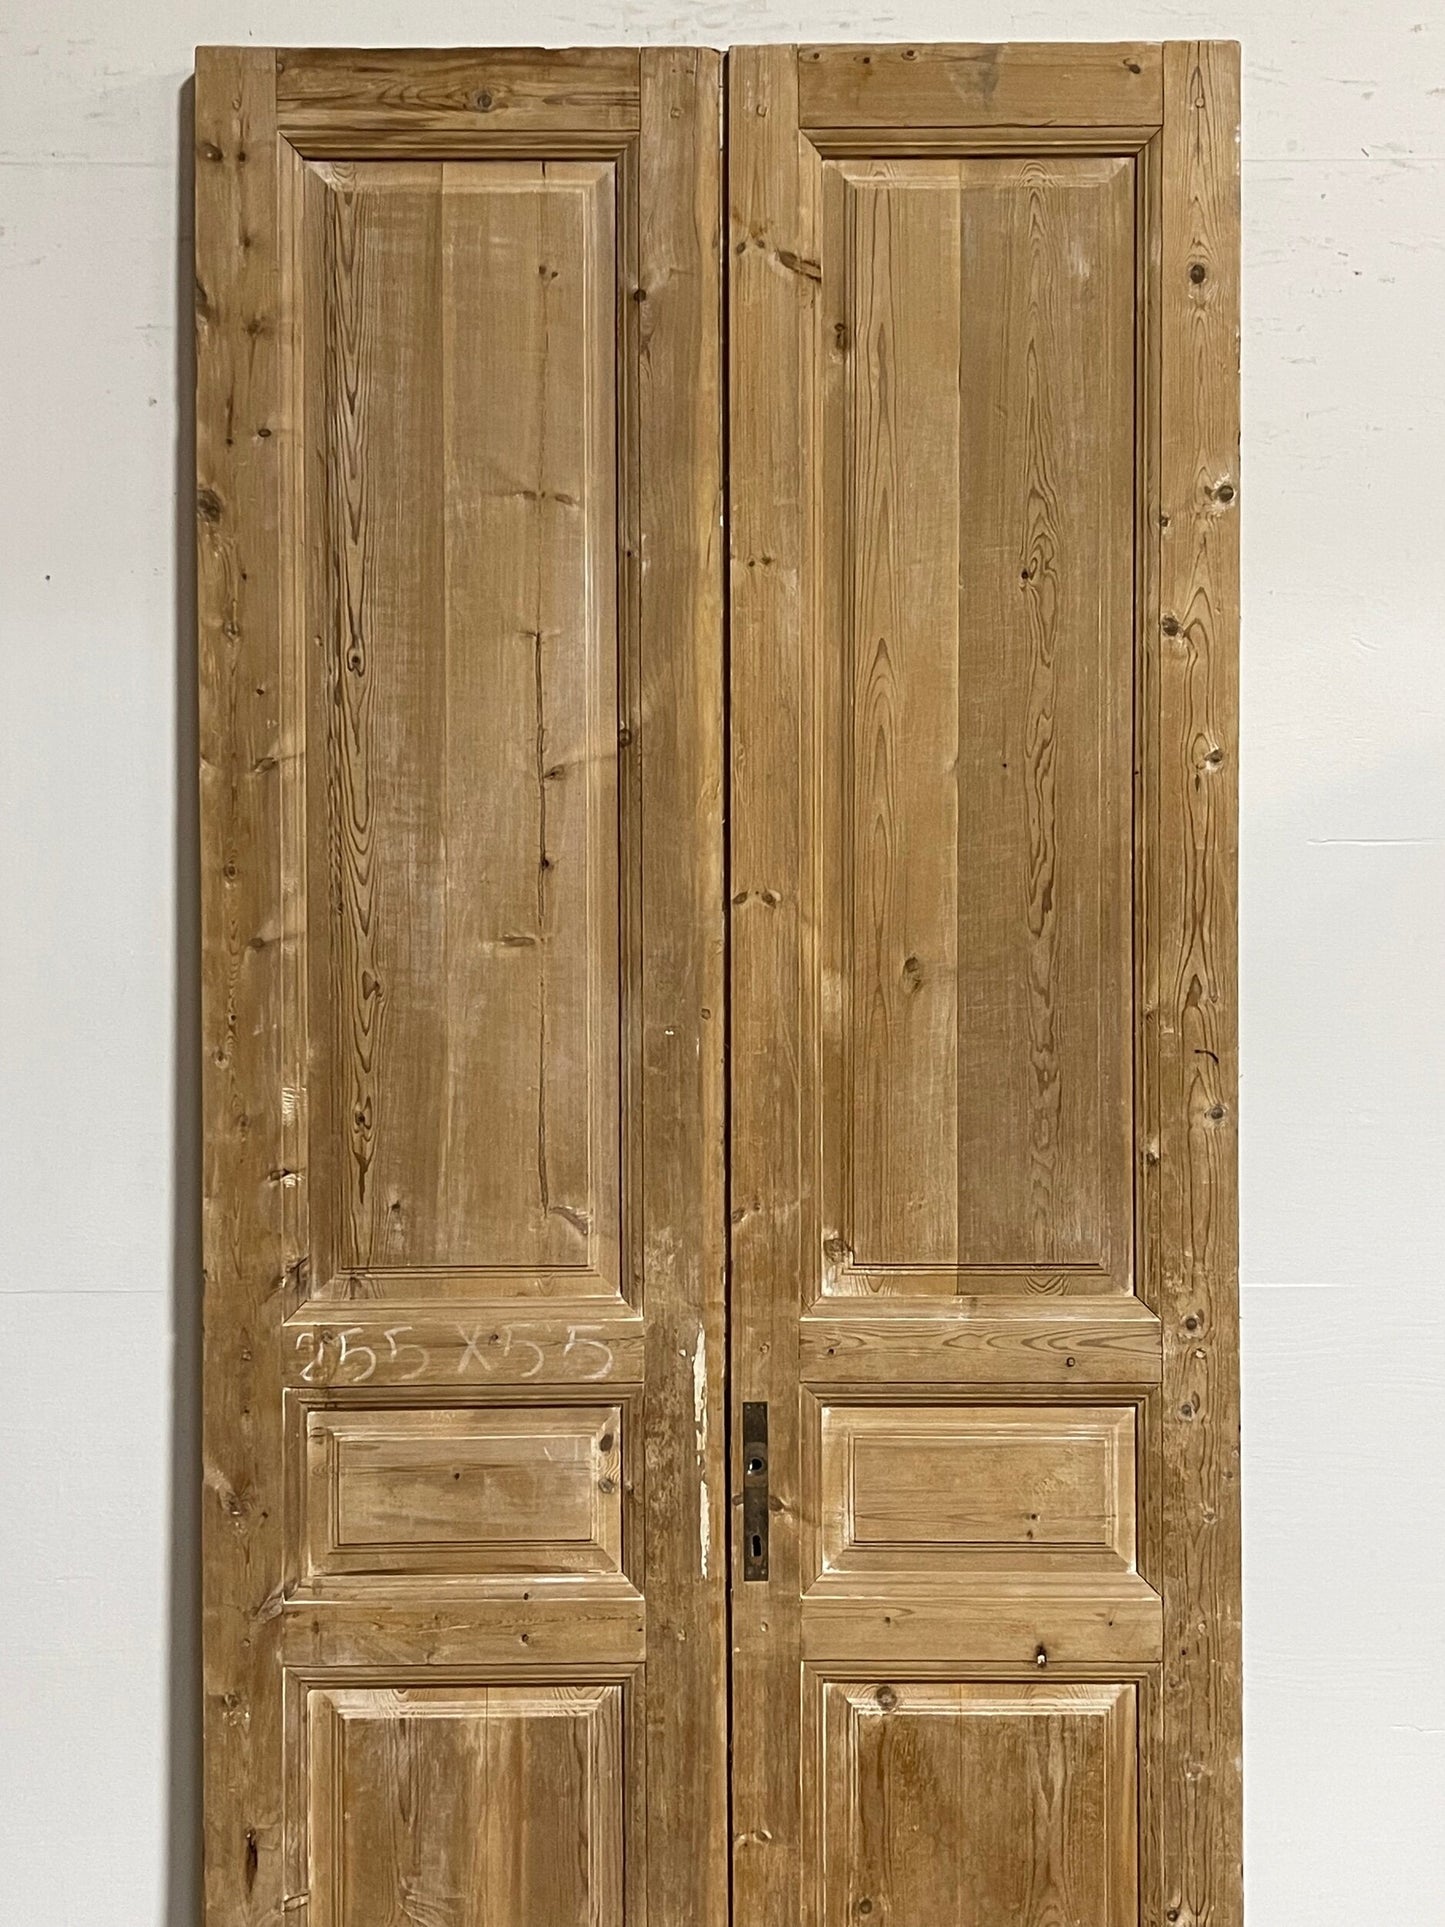 Antique French doors (100.5x43) H0077s